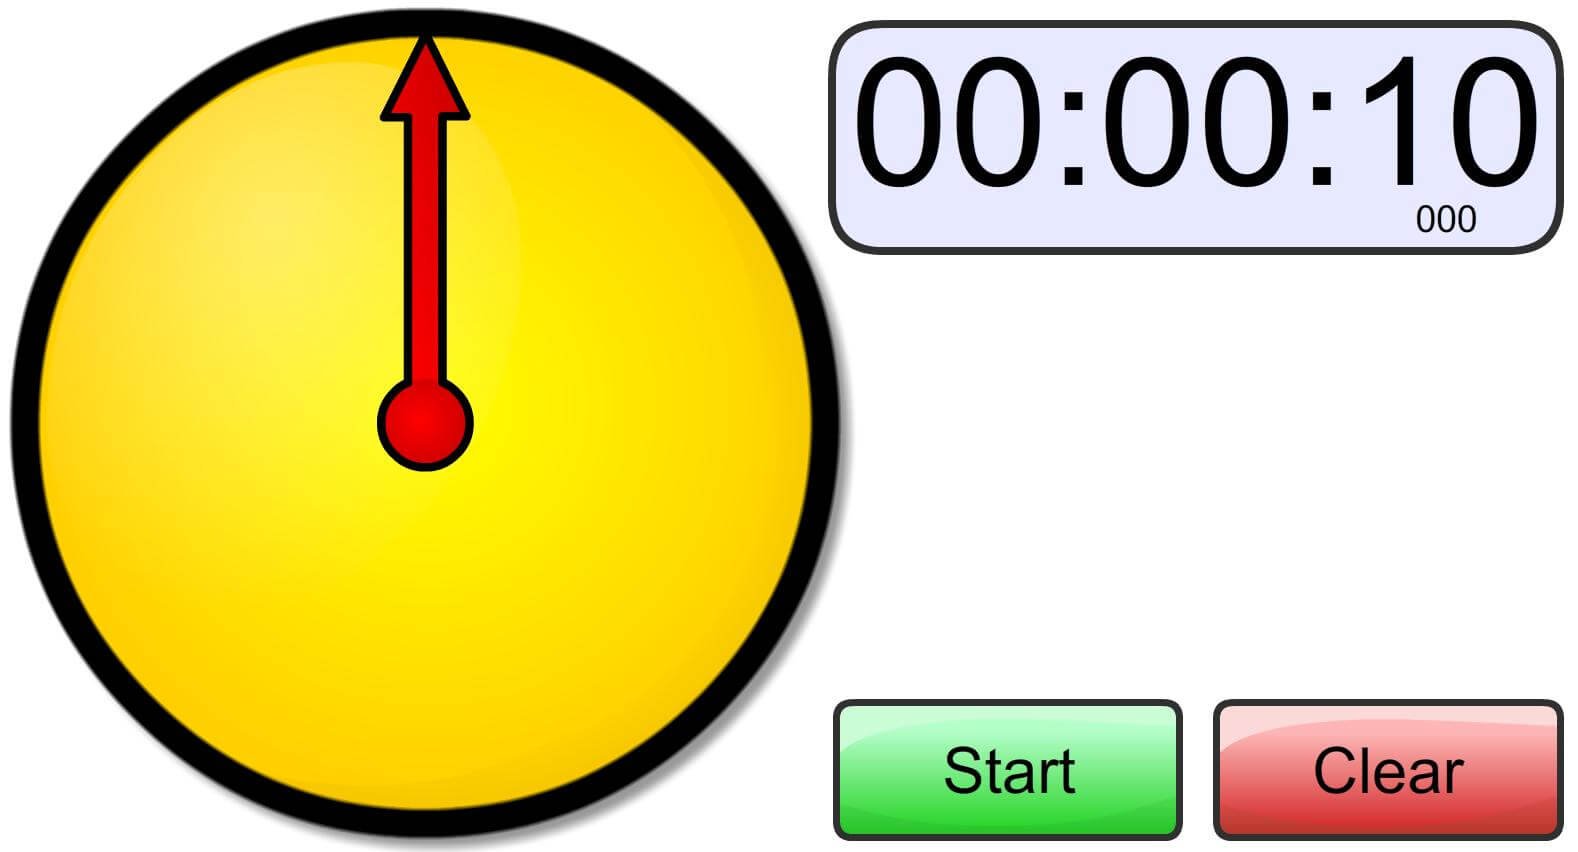 set timer for 1 hour 40 minutes